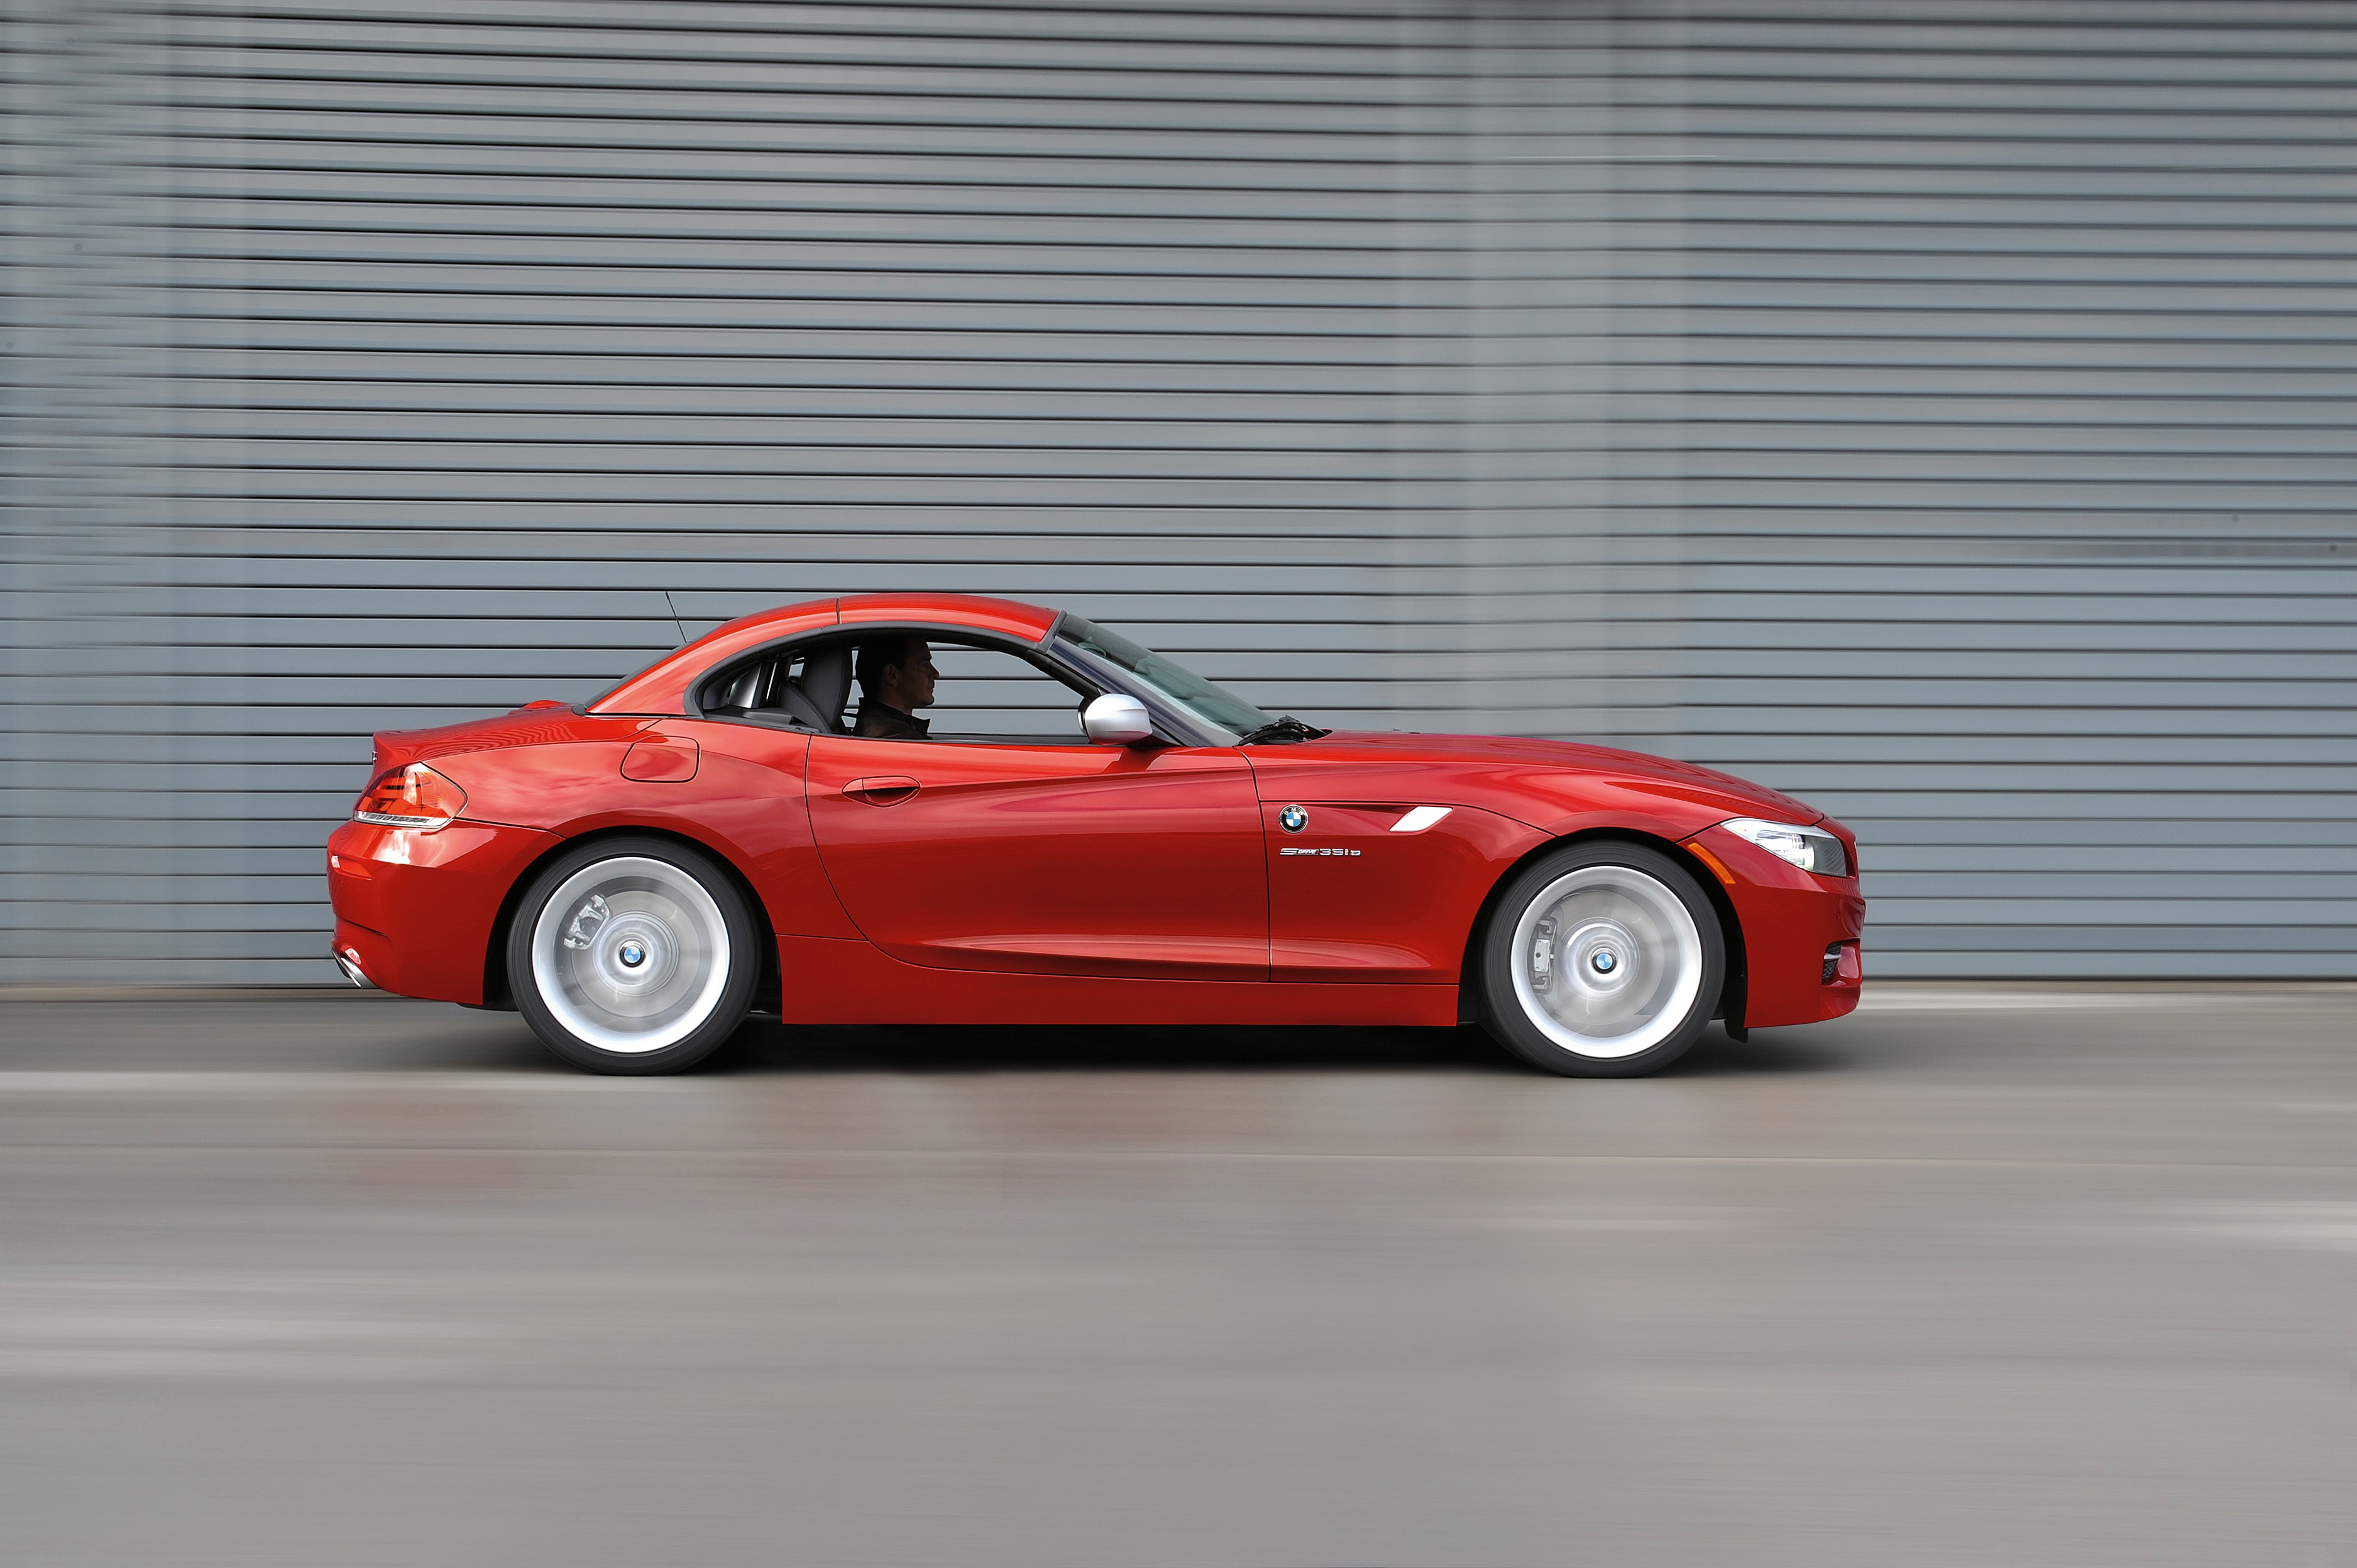 BMW-Z4-3.5is-rouge-profil-